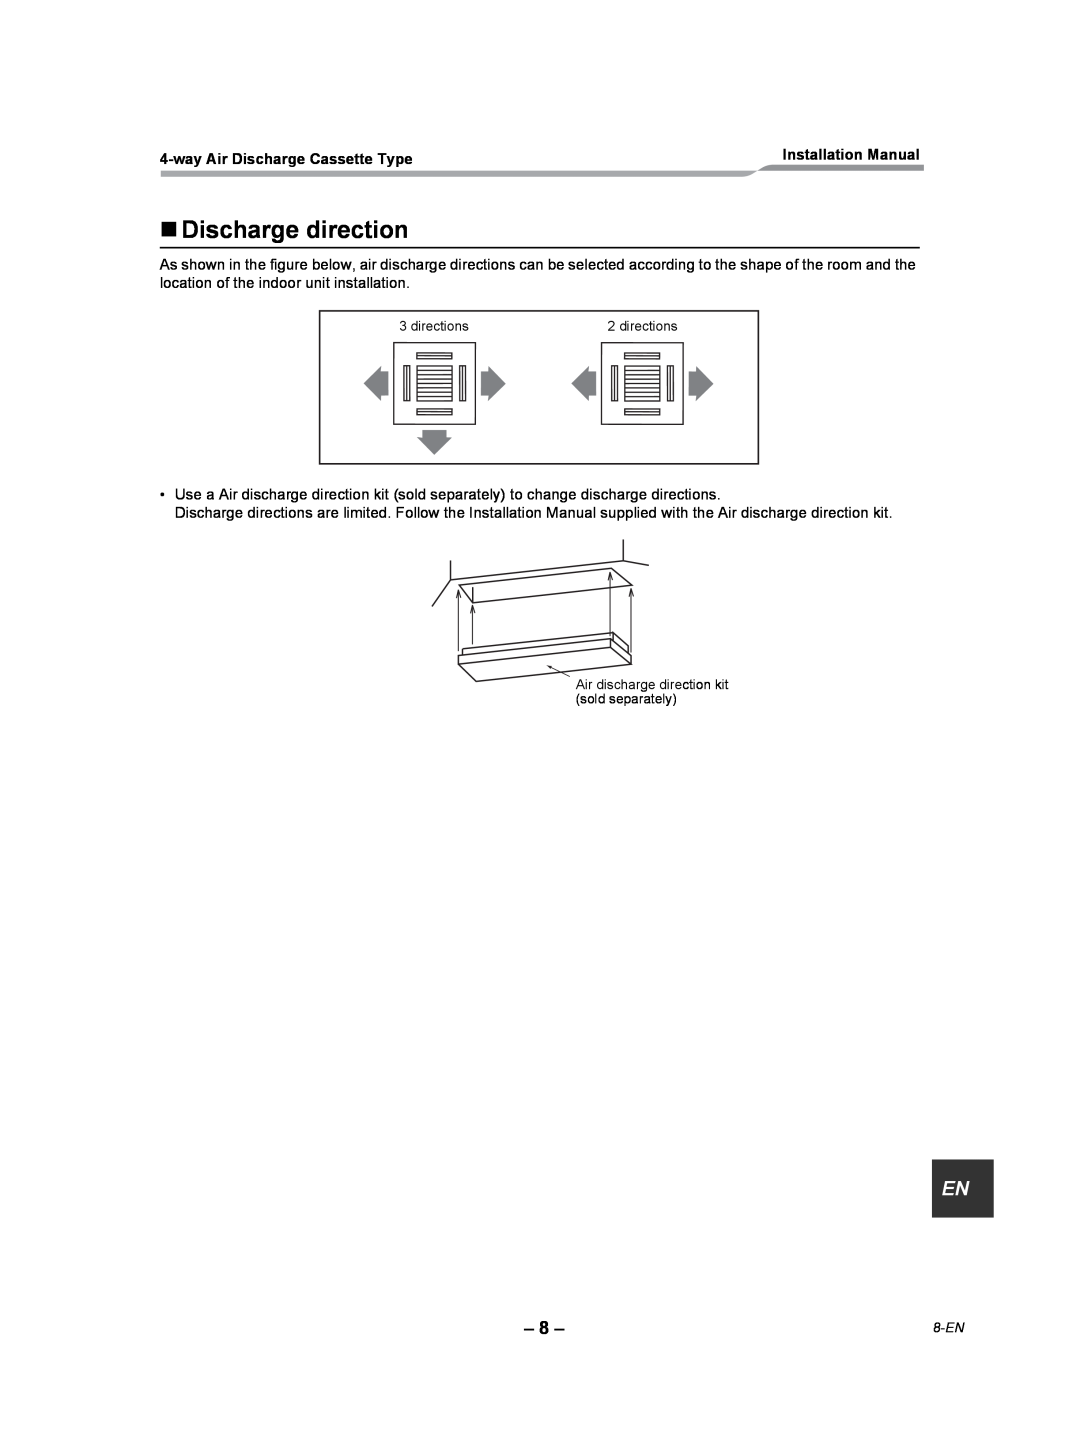 Toshiba RAV-SP180UT-UL installation manual „Discharge direction, wayAir Discharge Cassette Type 